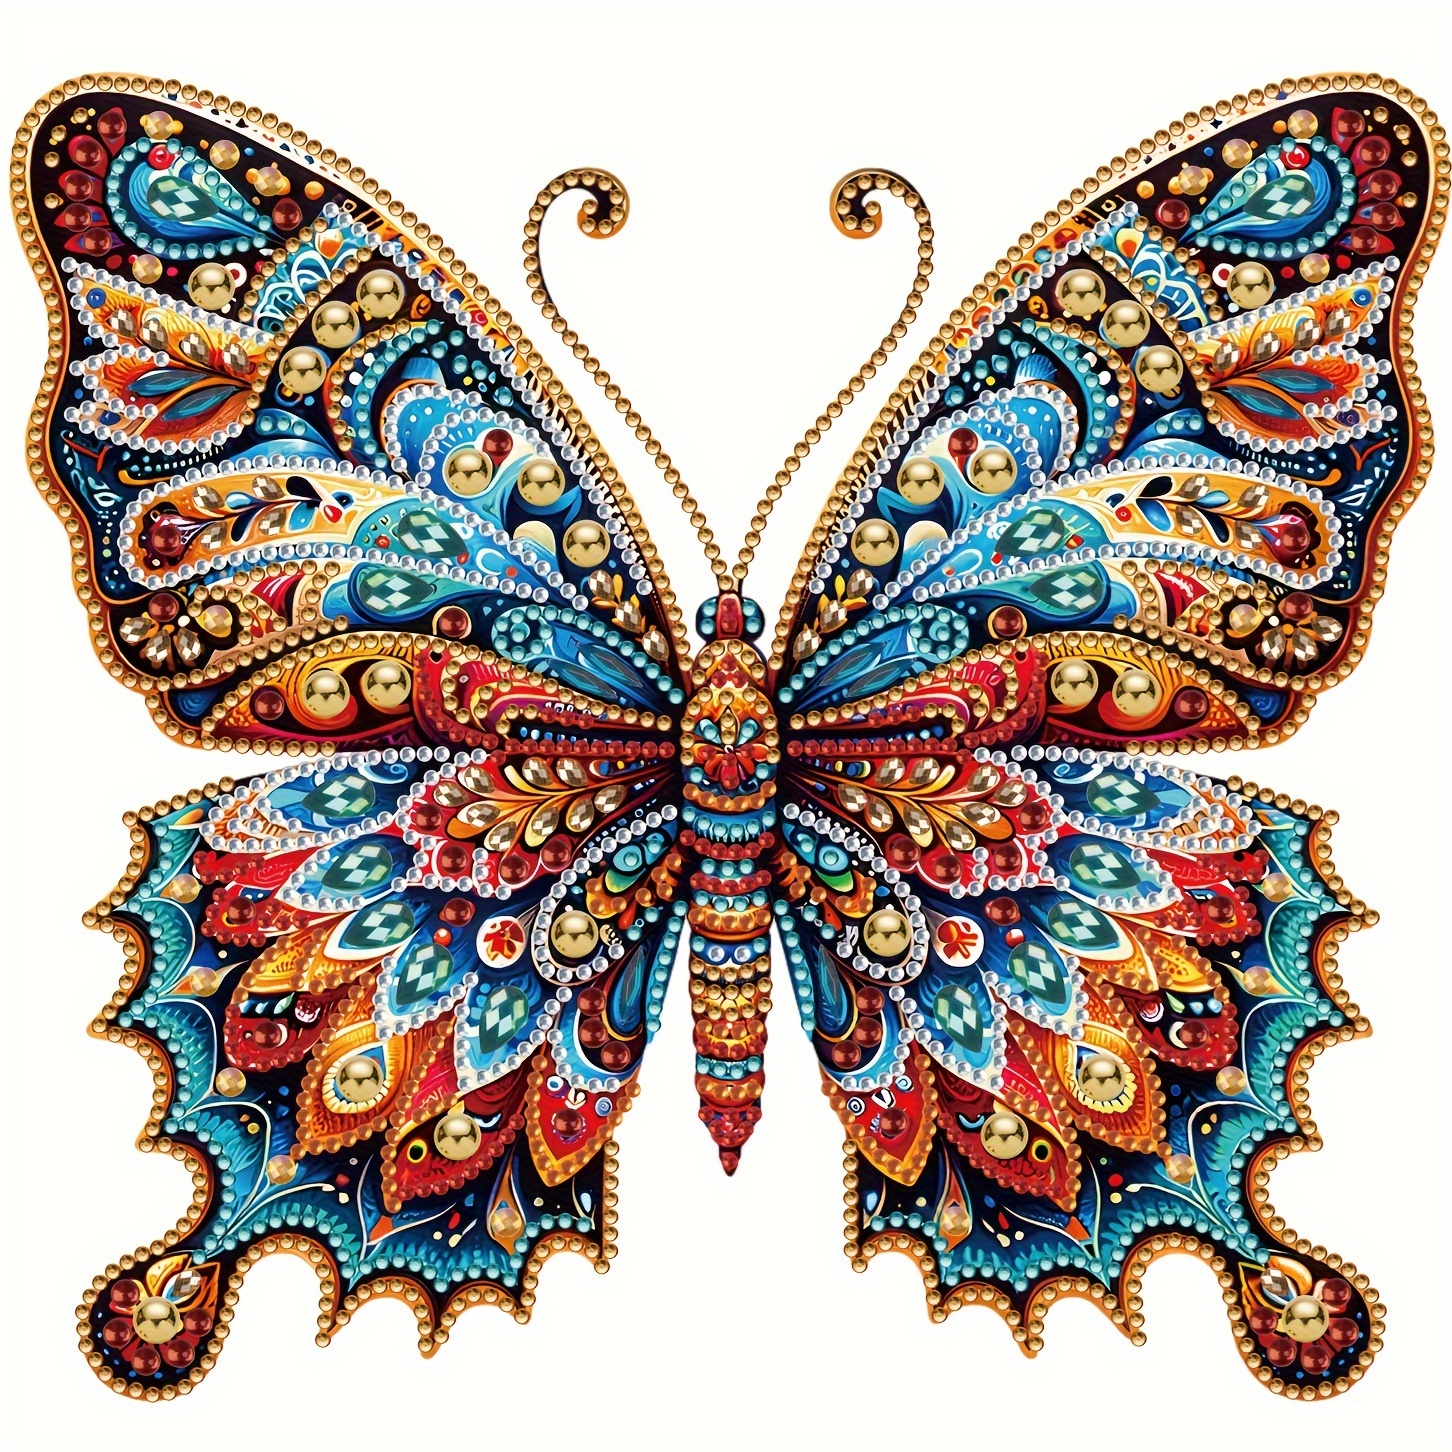 EOBROMD Diamond Painting Butterfly, Diamond Painting Kits for